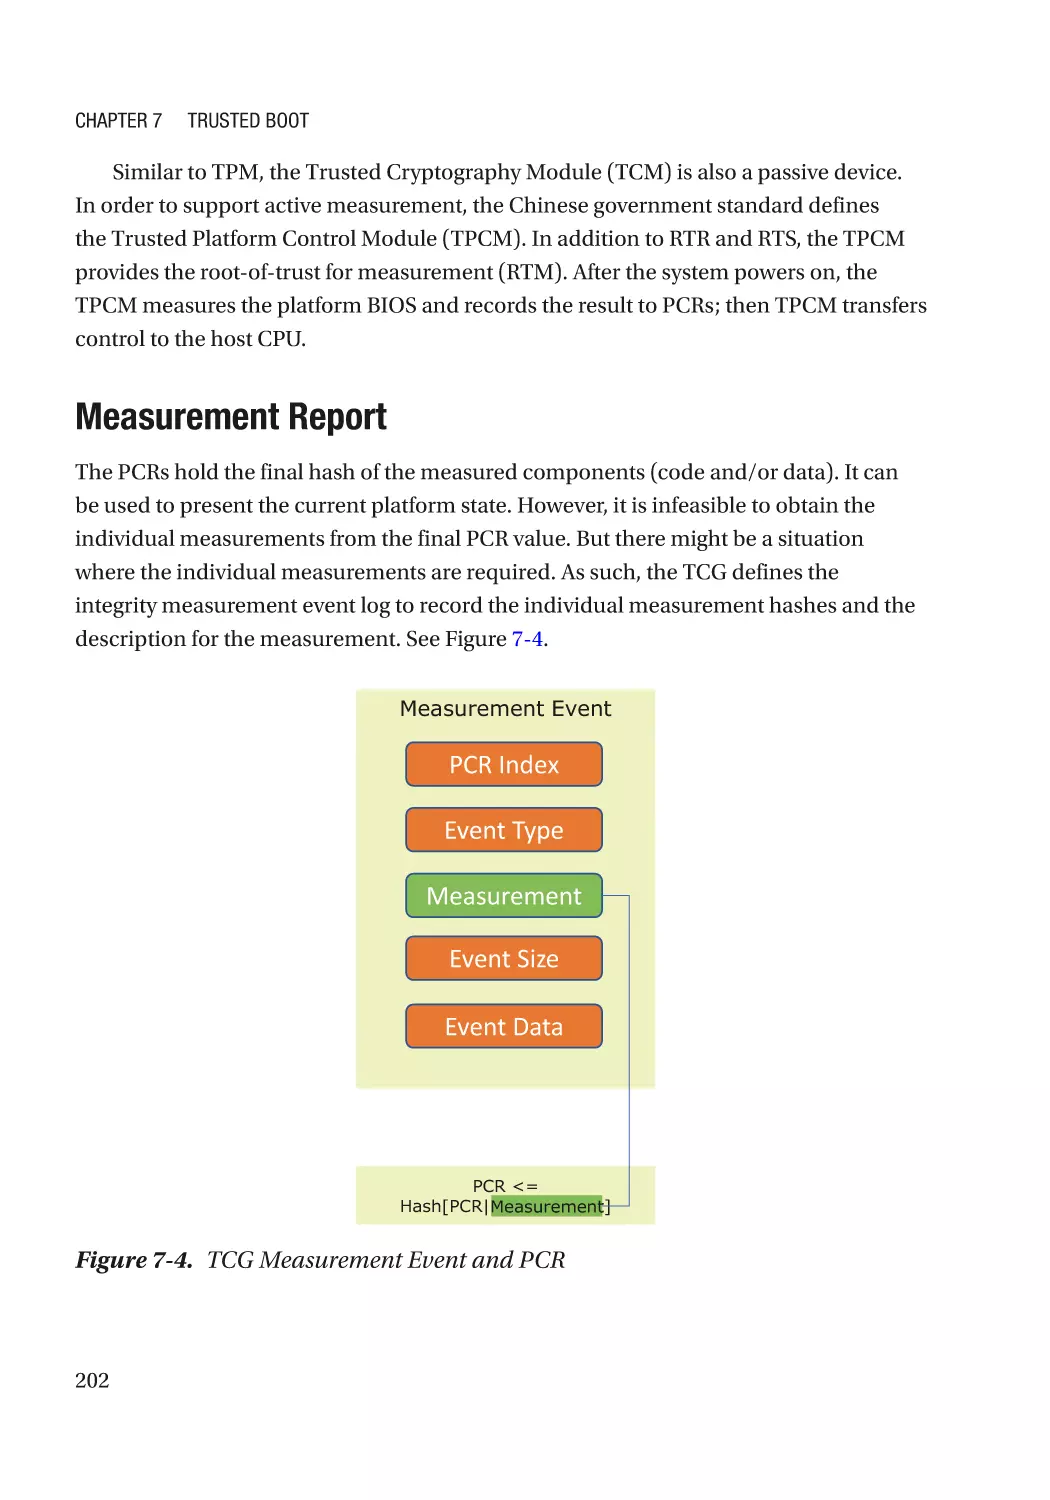 Measurement Report